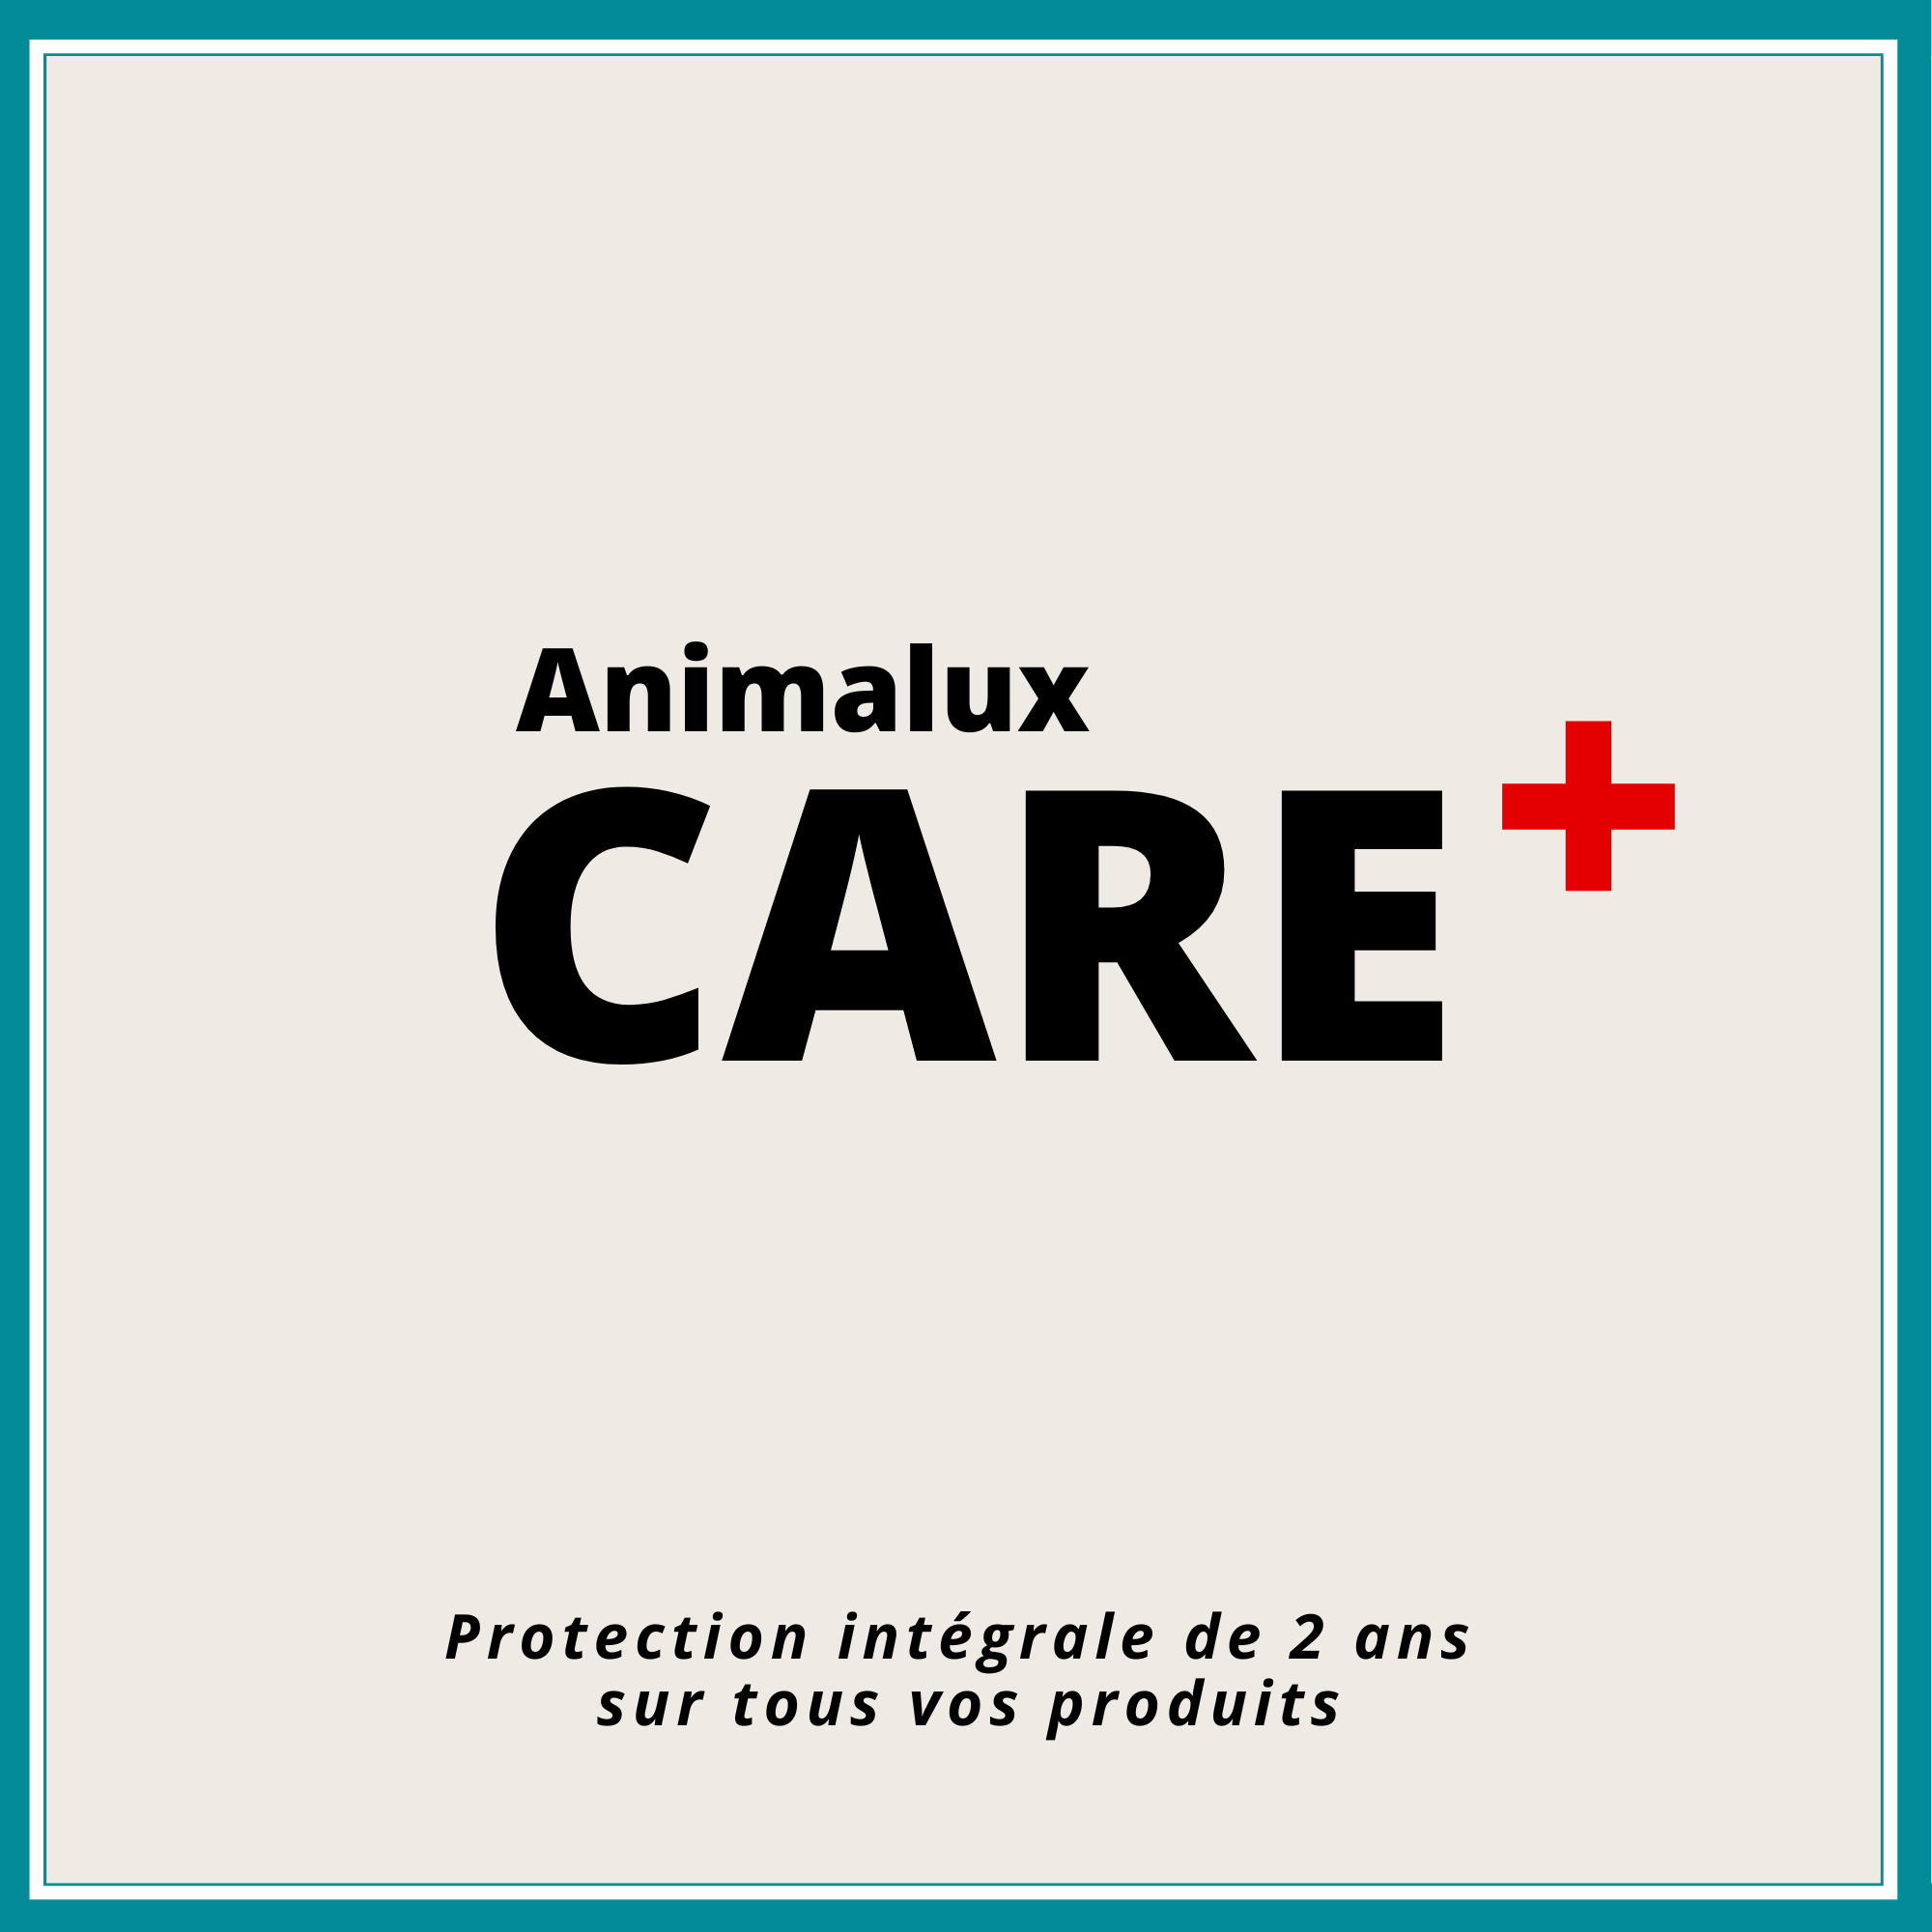 AnimaluxCare+